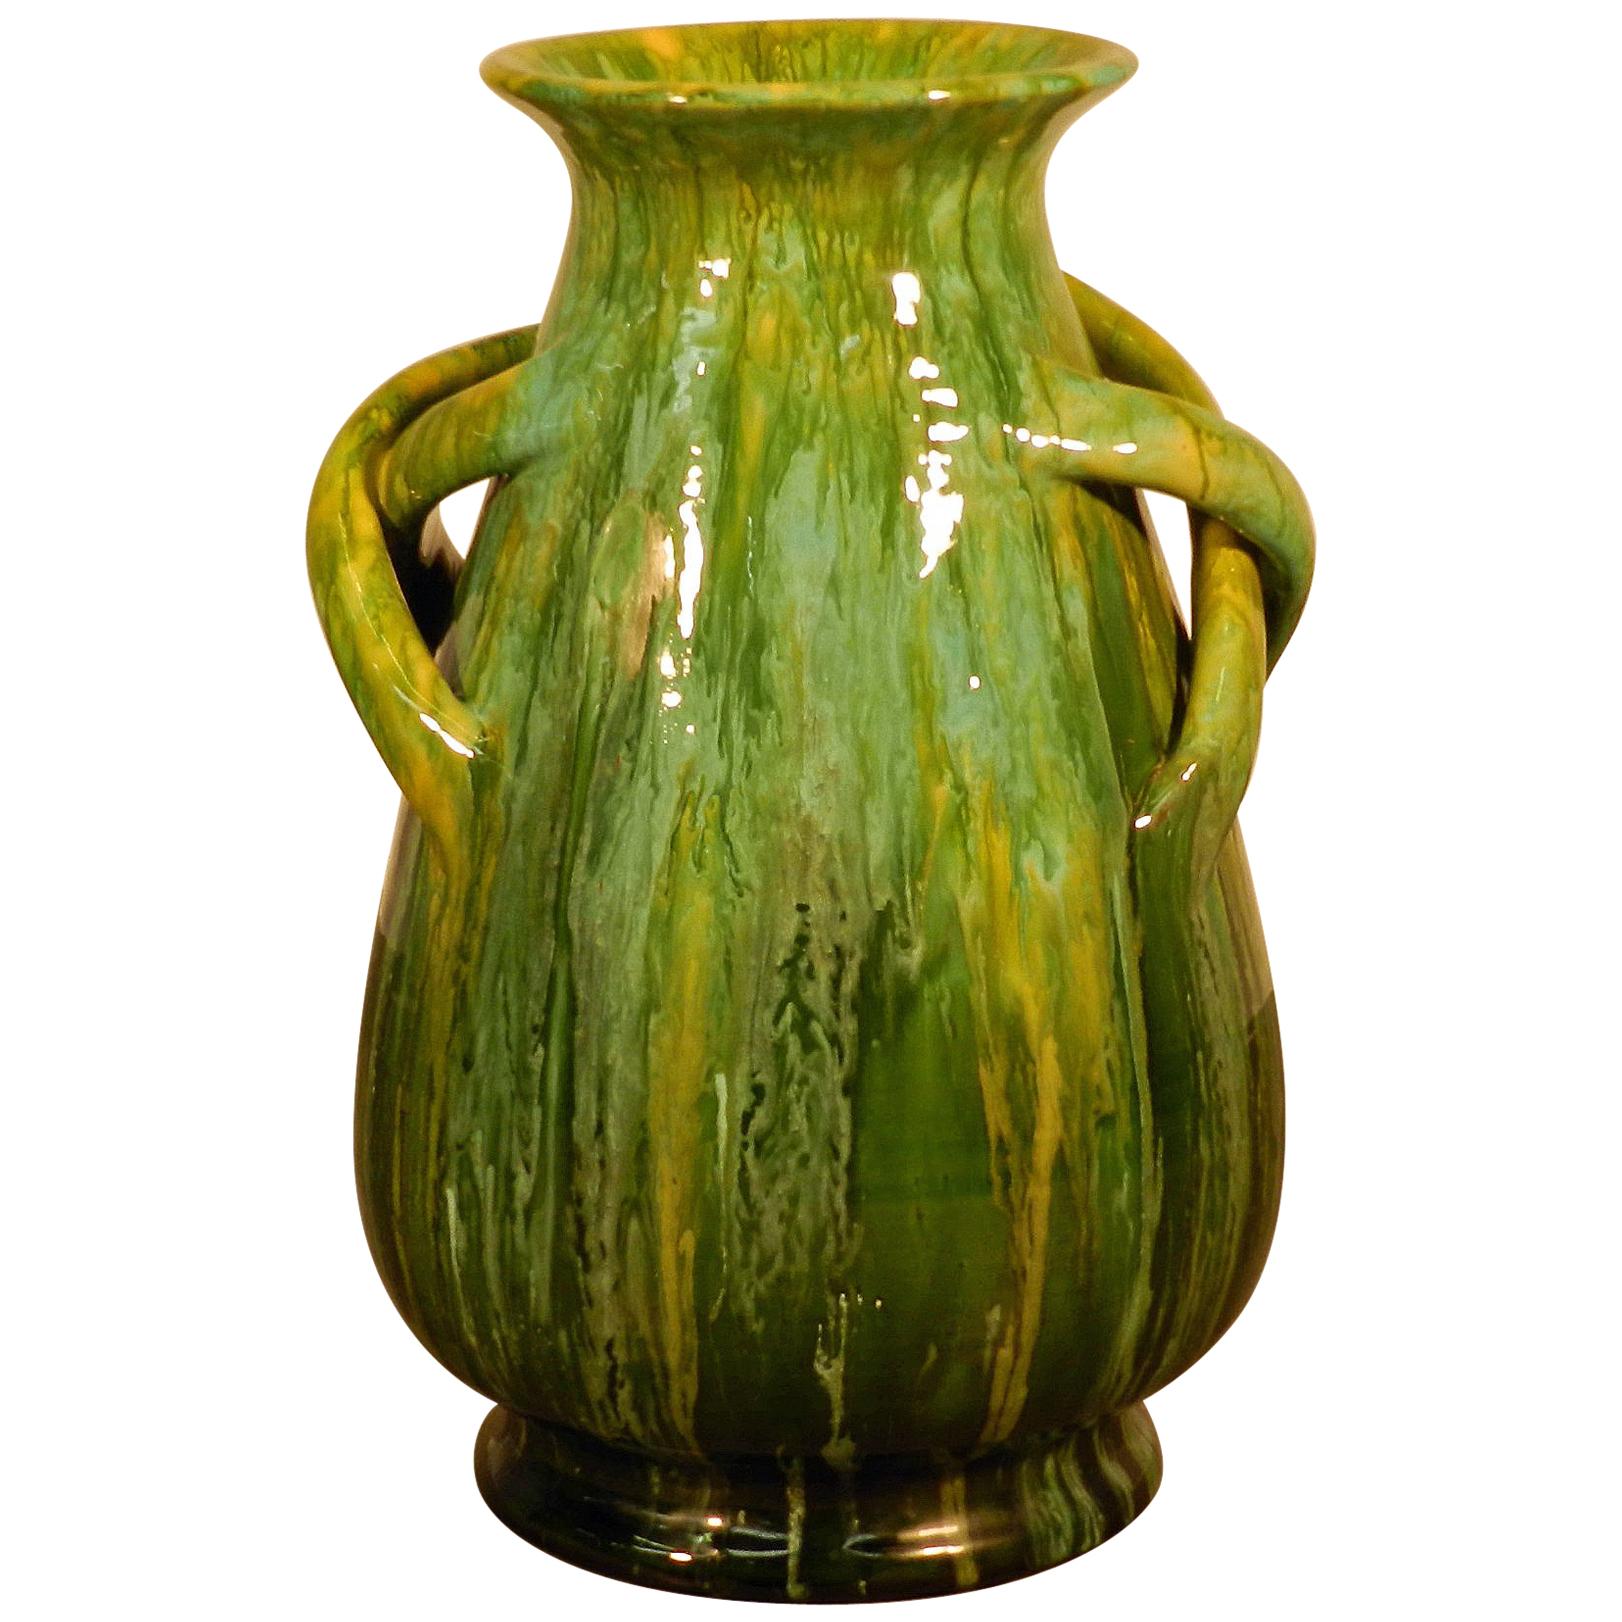 Bavent, Ceramic Vase Art Nouveau, Signed TN "tuilerie Normande" Bavent, 1900